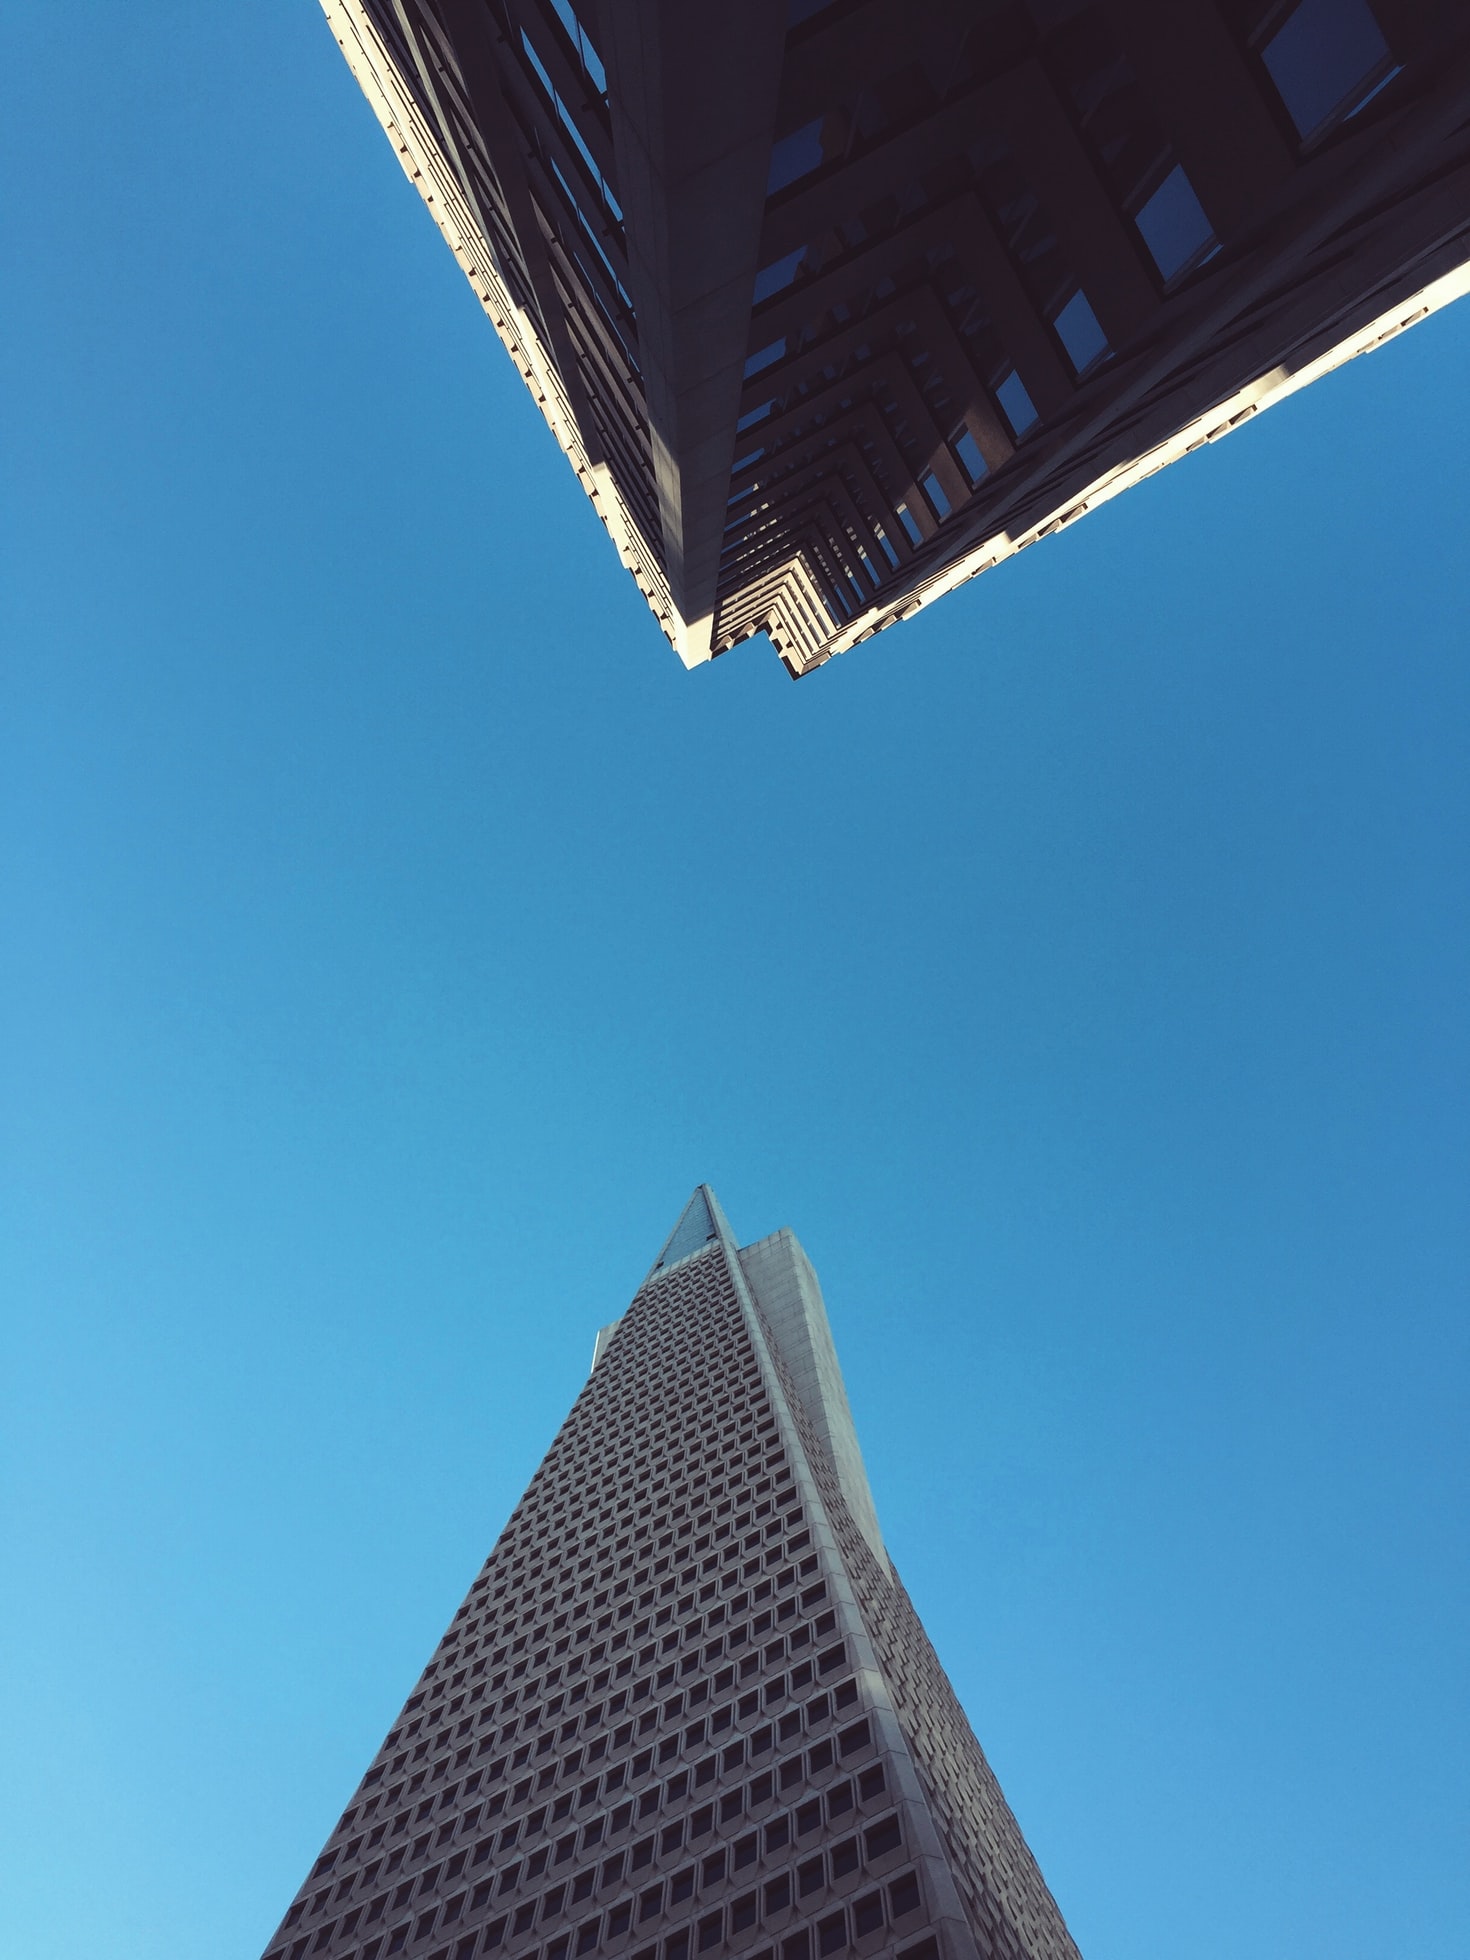 Picture of two skyscraper buildings